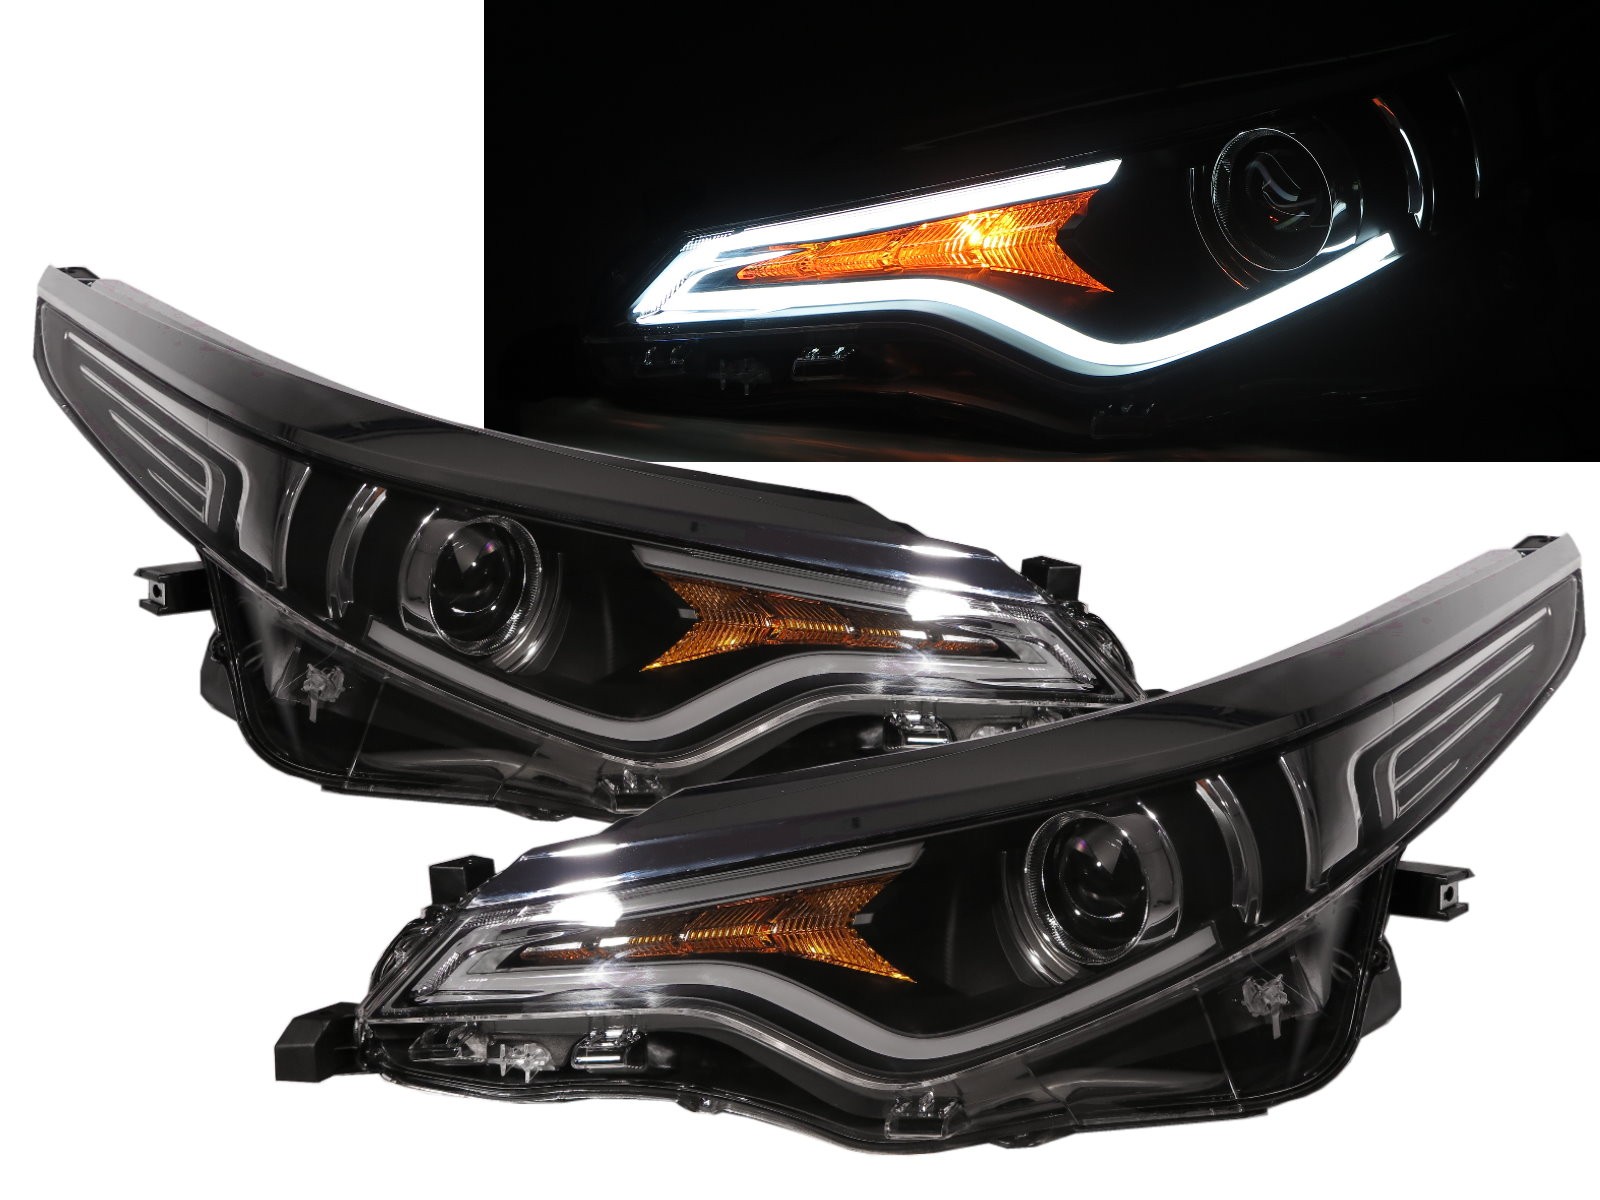 CrazyTheGod Levin 2014-2015 Sedan 4D LED Projector Headlight Headlamp Black China Type for TOYOTA LHD